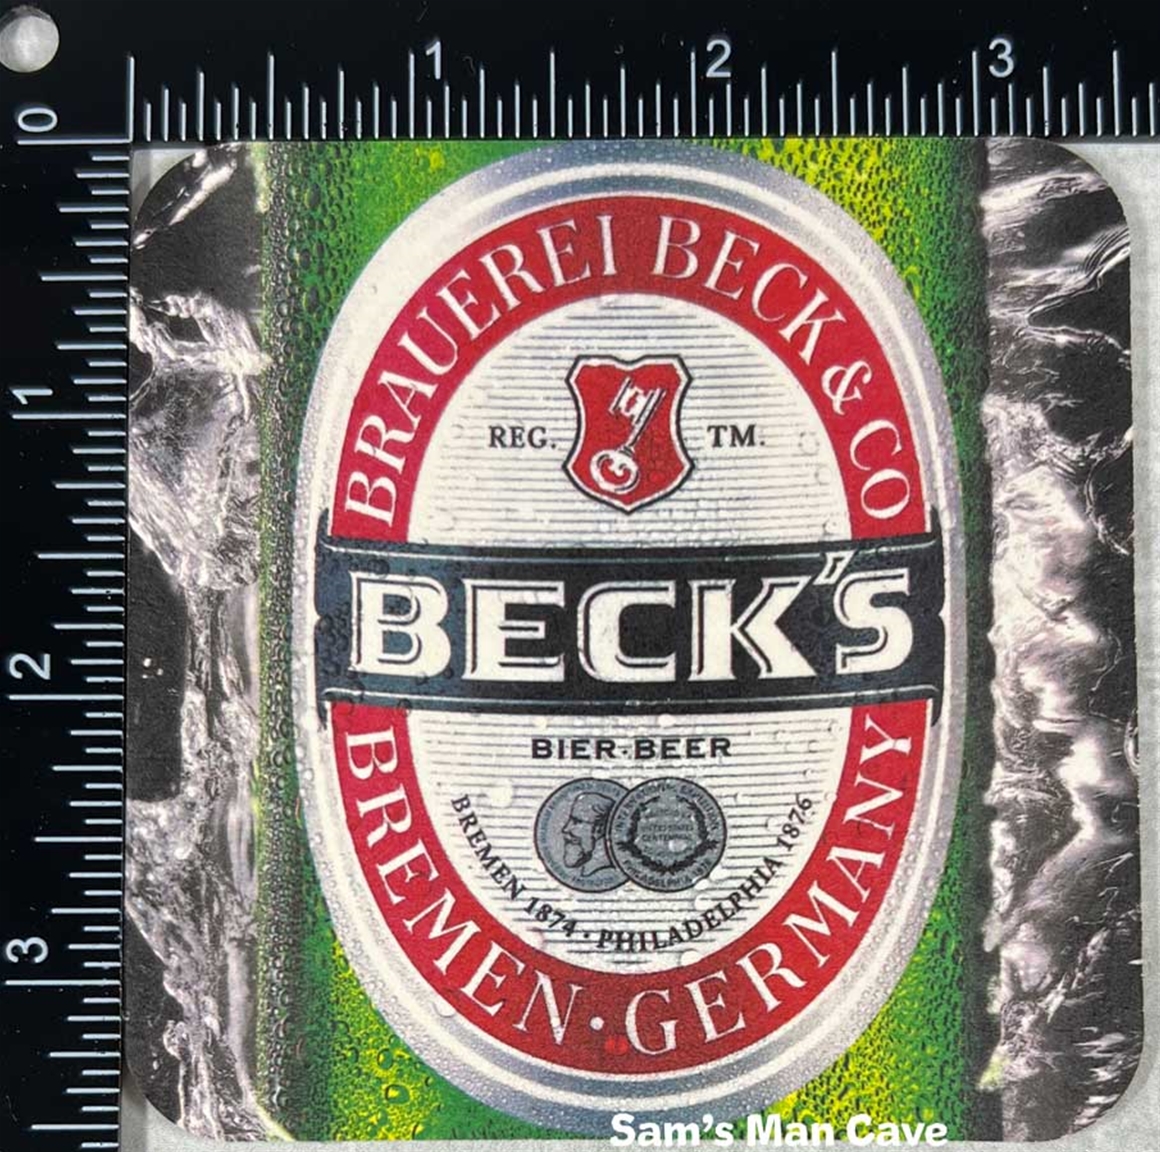 Beck's Beer Cardboard Beer Coasters Mats Man Cave Home Bar New Lot of 5 Sleeves 